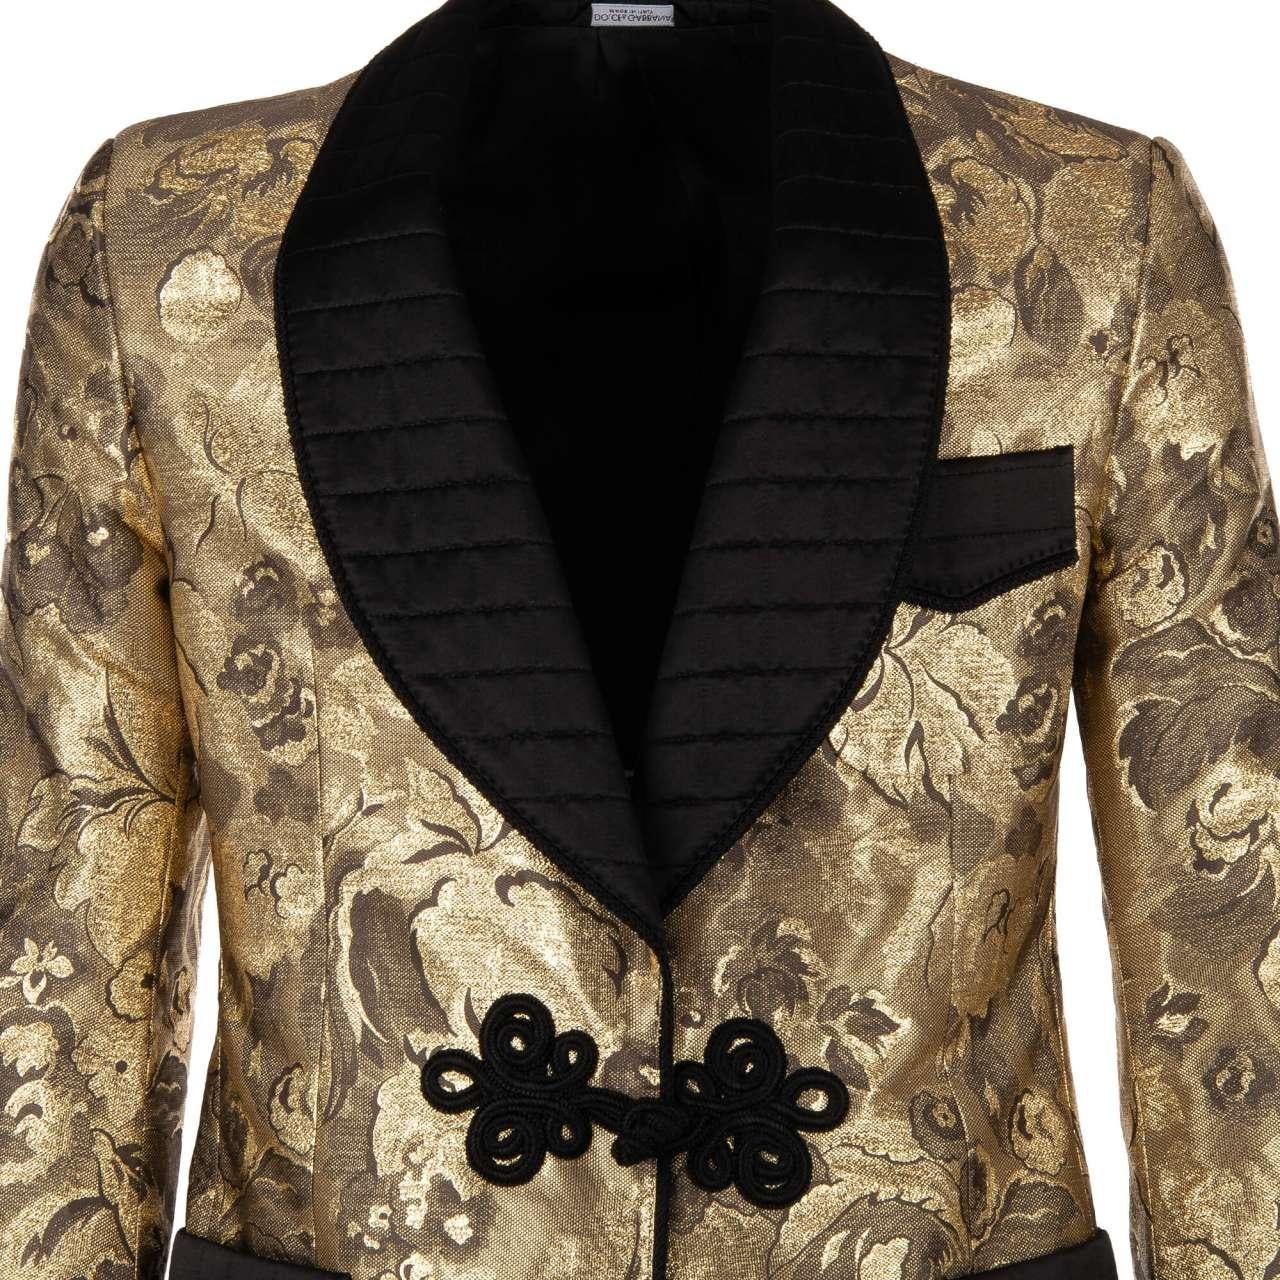 Dolce & Gabbana Baroque Floral Tuxedo Blazer with Rope Closure Black Gold 46 In Excellent Condition For Sale In Erkrath, DE